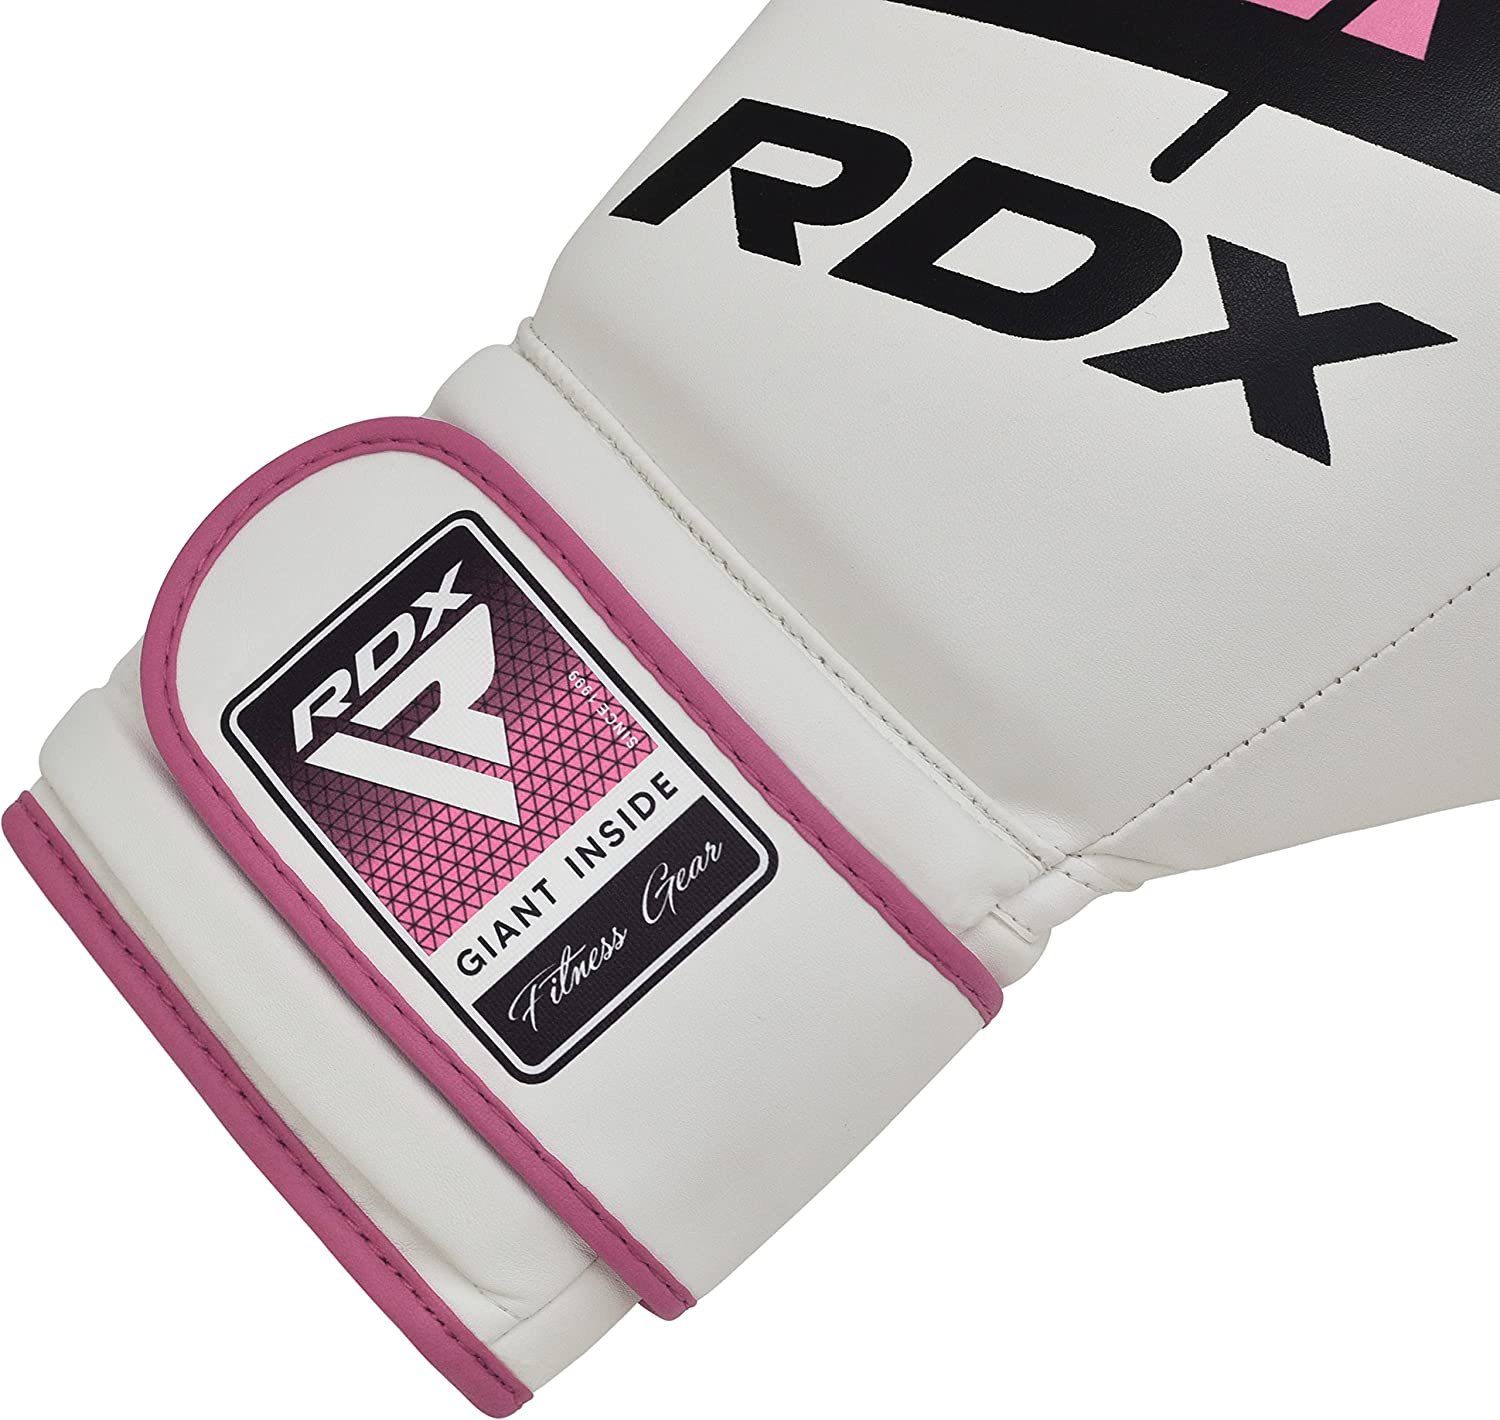 RDX Boxhandschuhe Thai Muay Sparring Boxhandschuhe Pink RDX Training Boxsack Sports Kickboxing